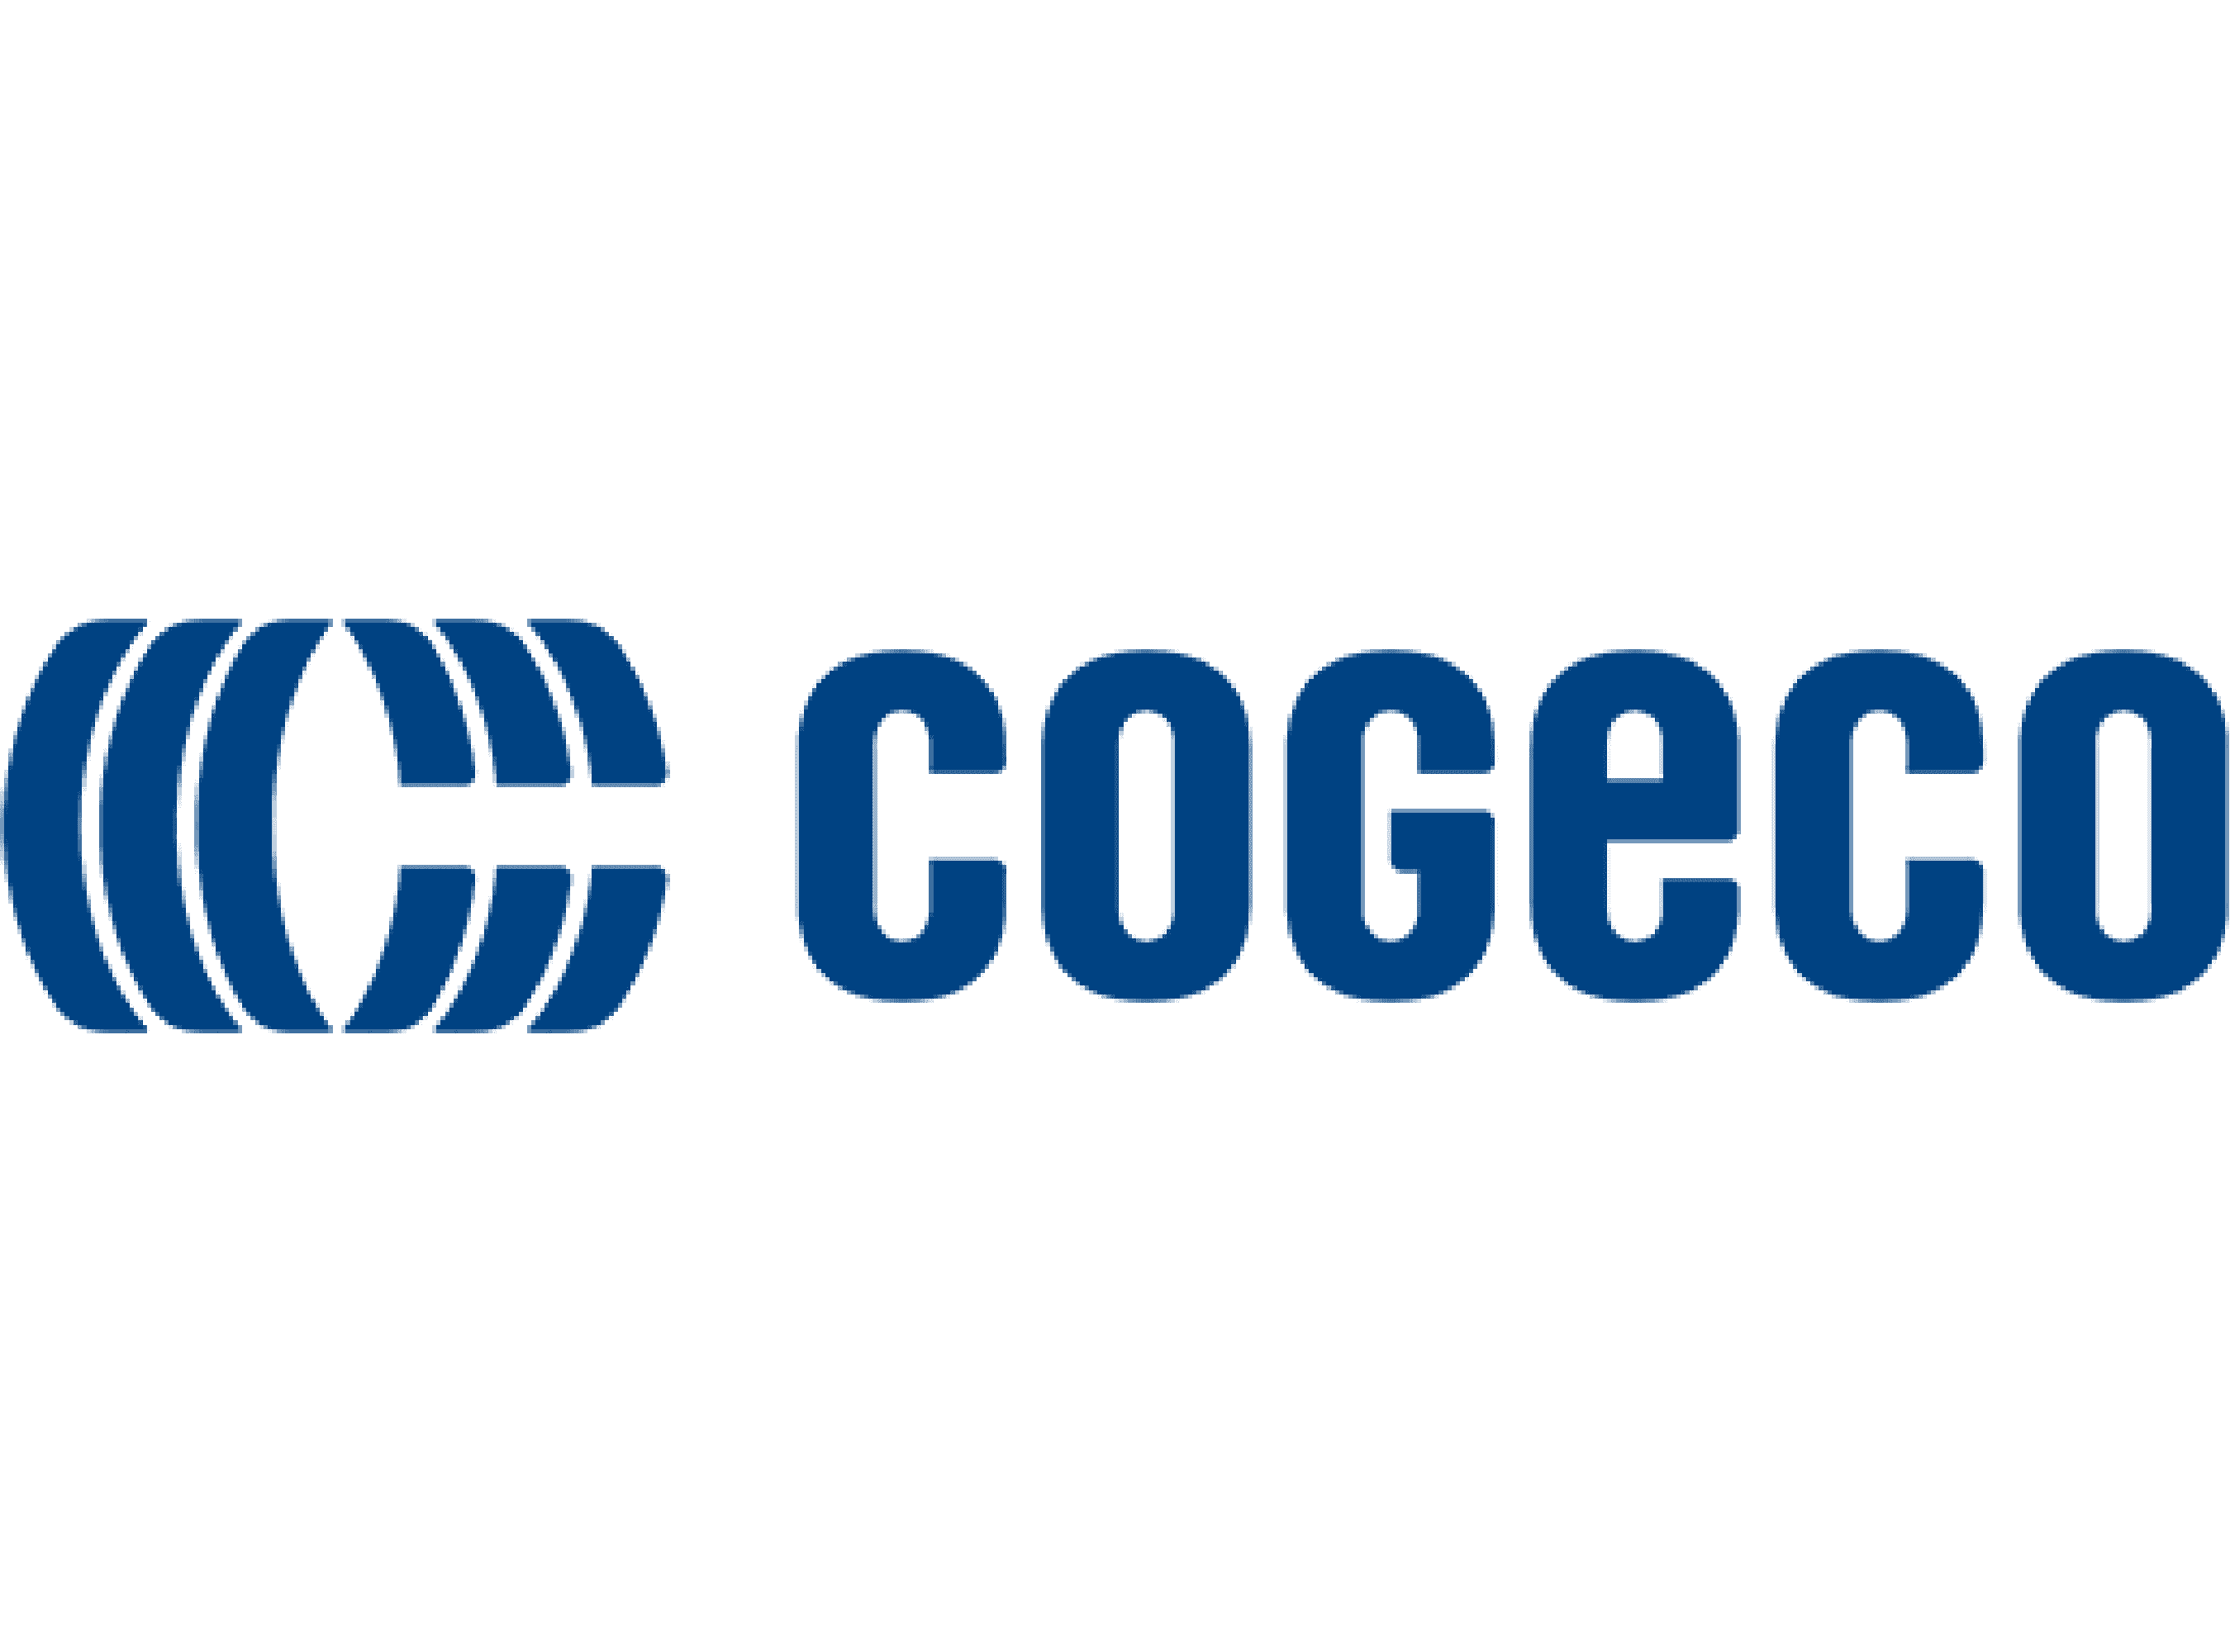 Logo Cogeco